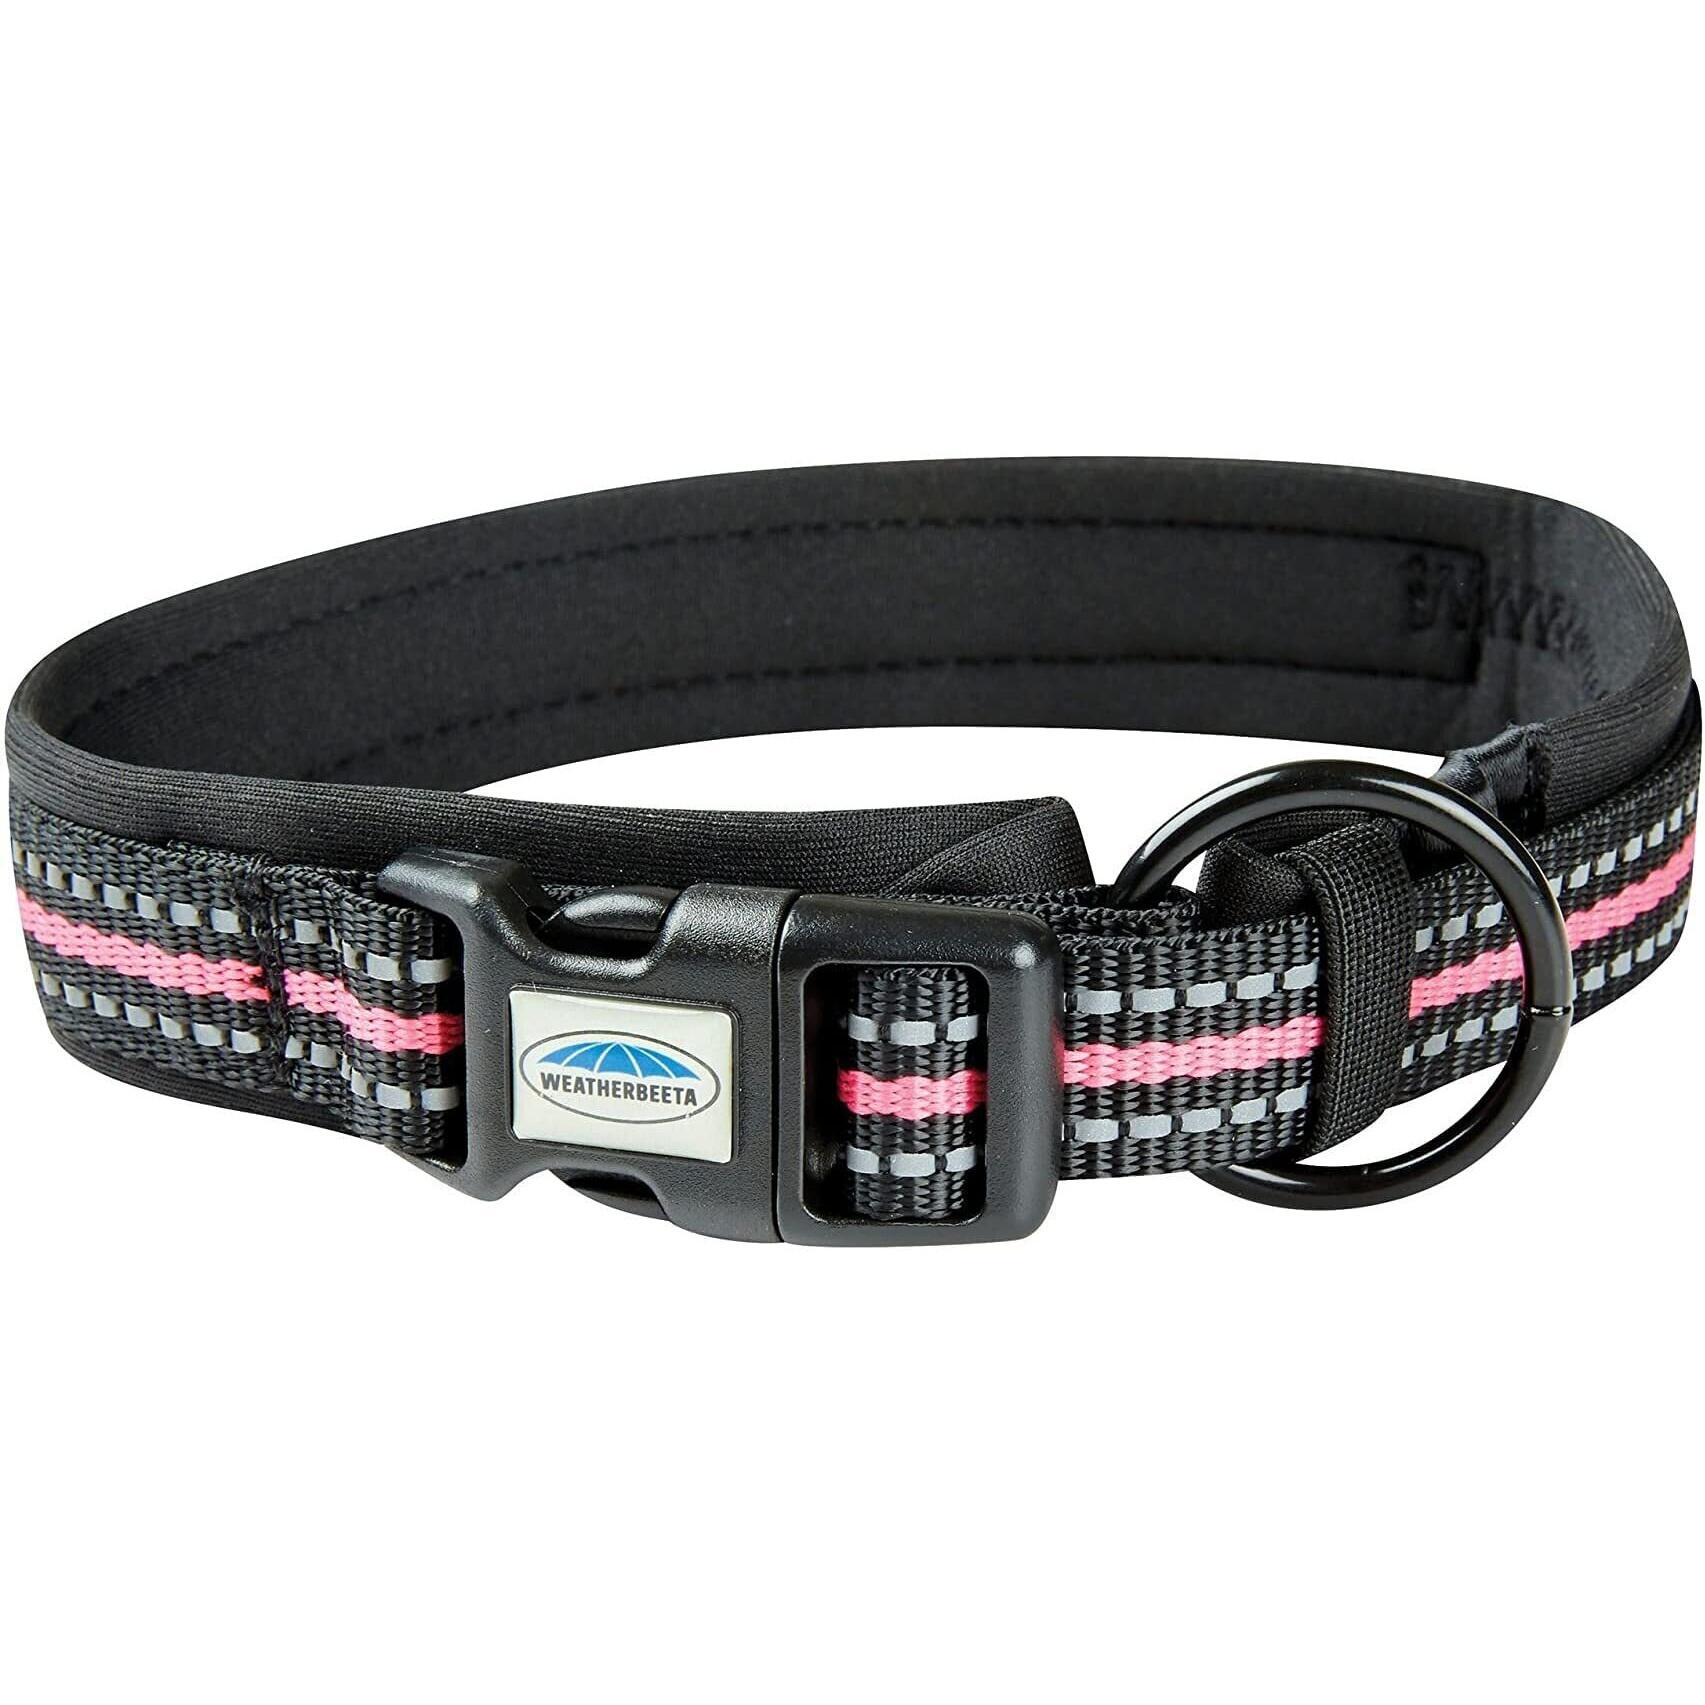 WEATHERBEETA Reflective Dog Collar (Black/Pink)